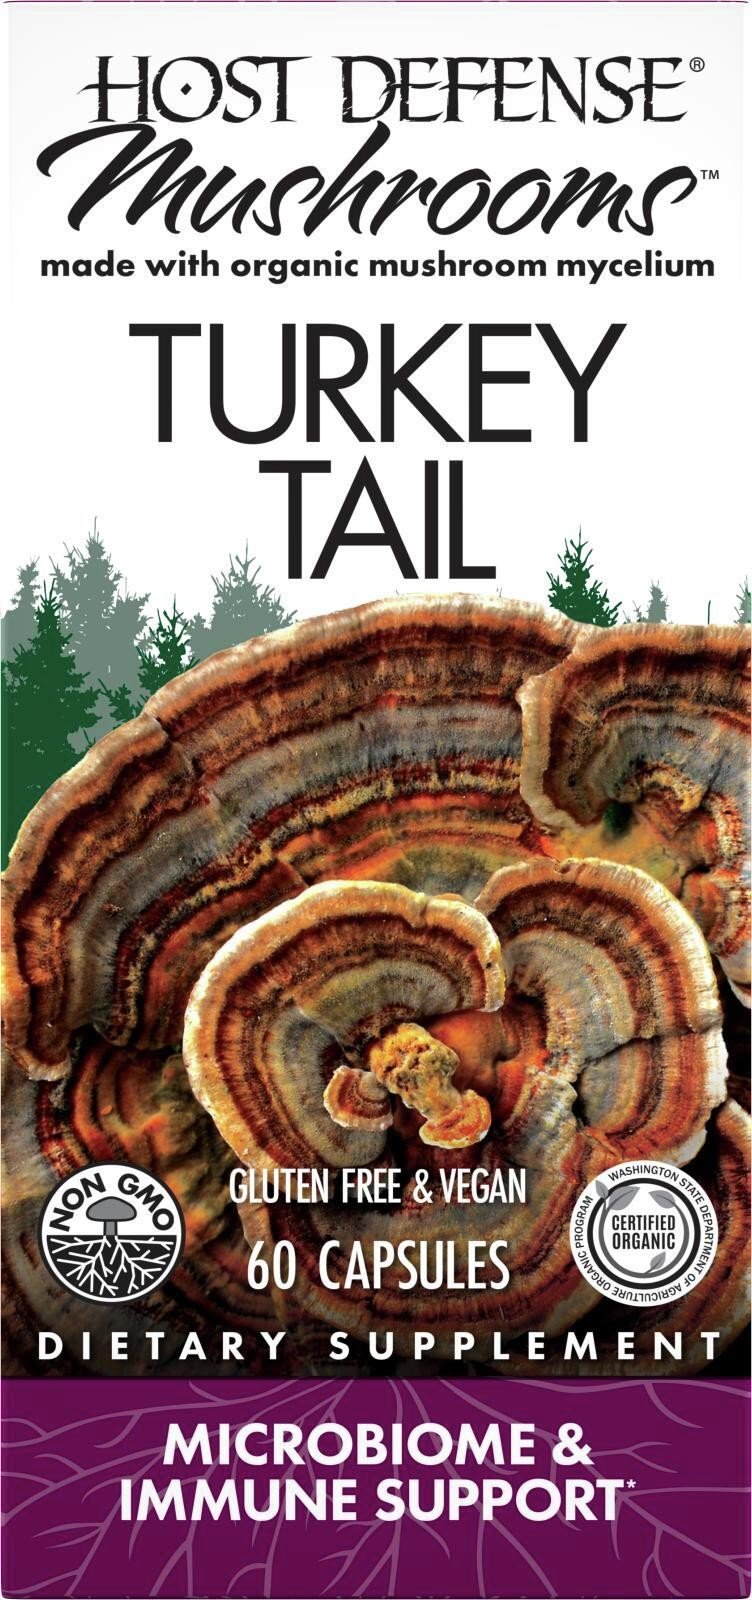 Fungi Perfecti/Host Defense Turkey Tail 60 Capsule